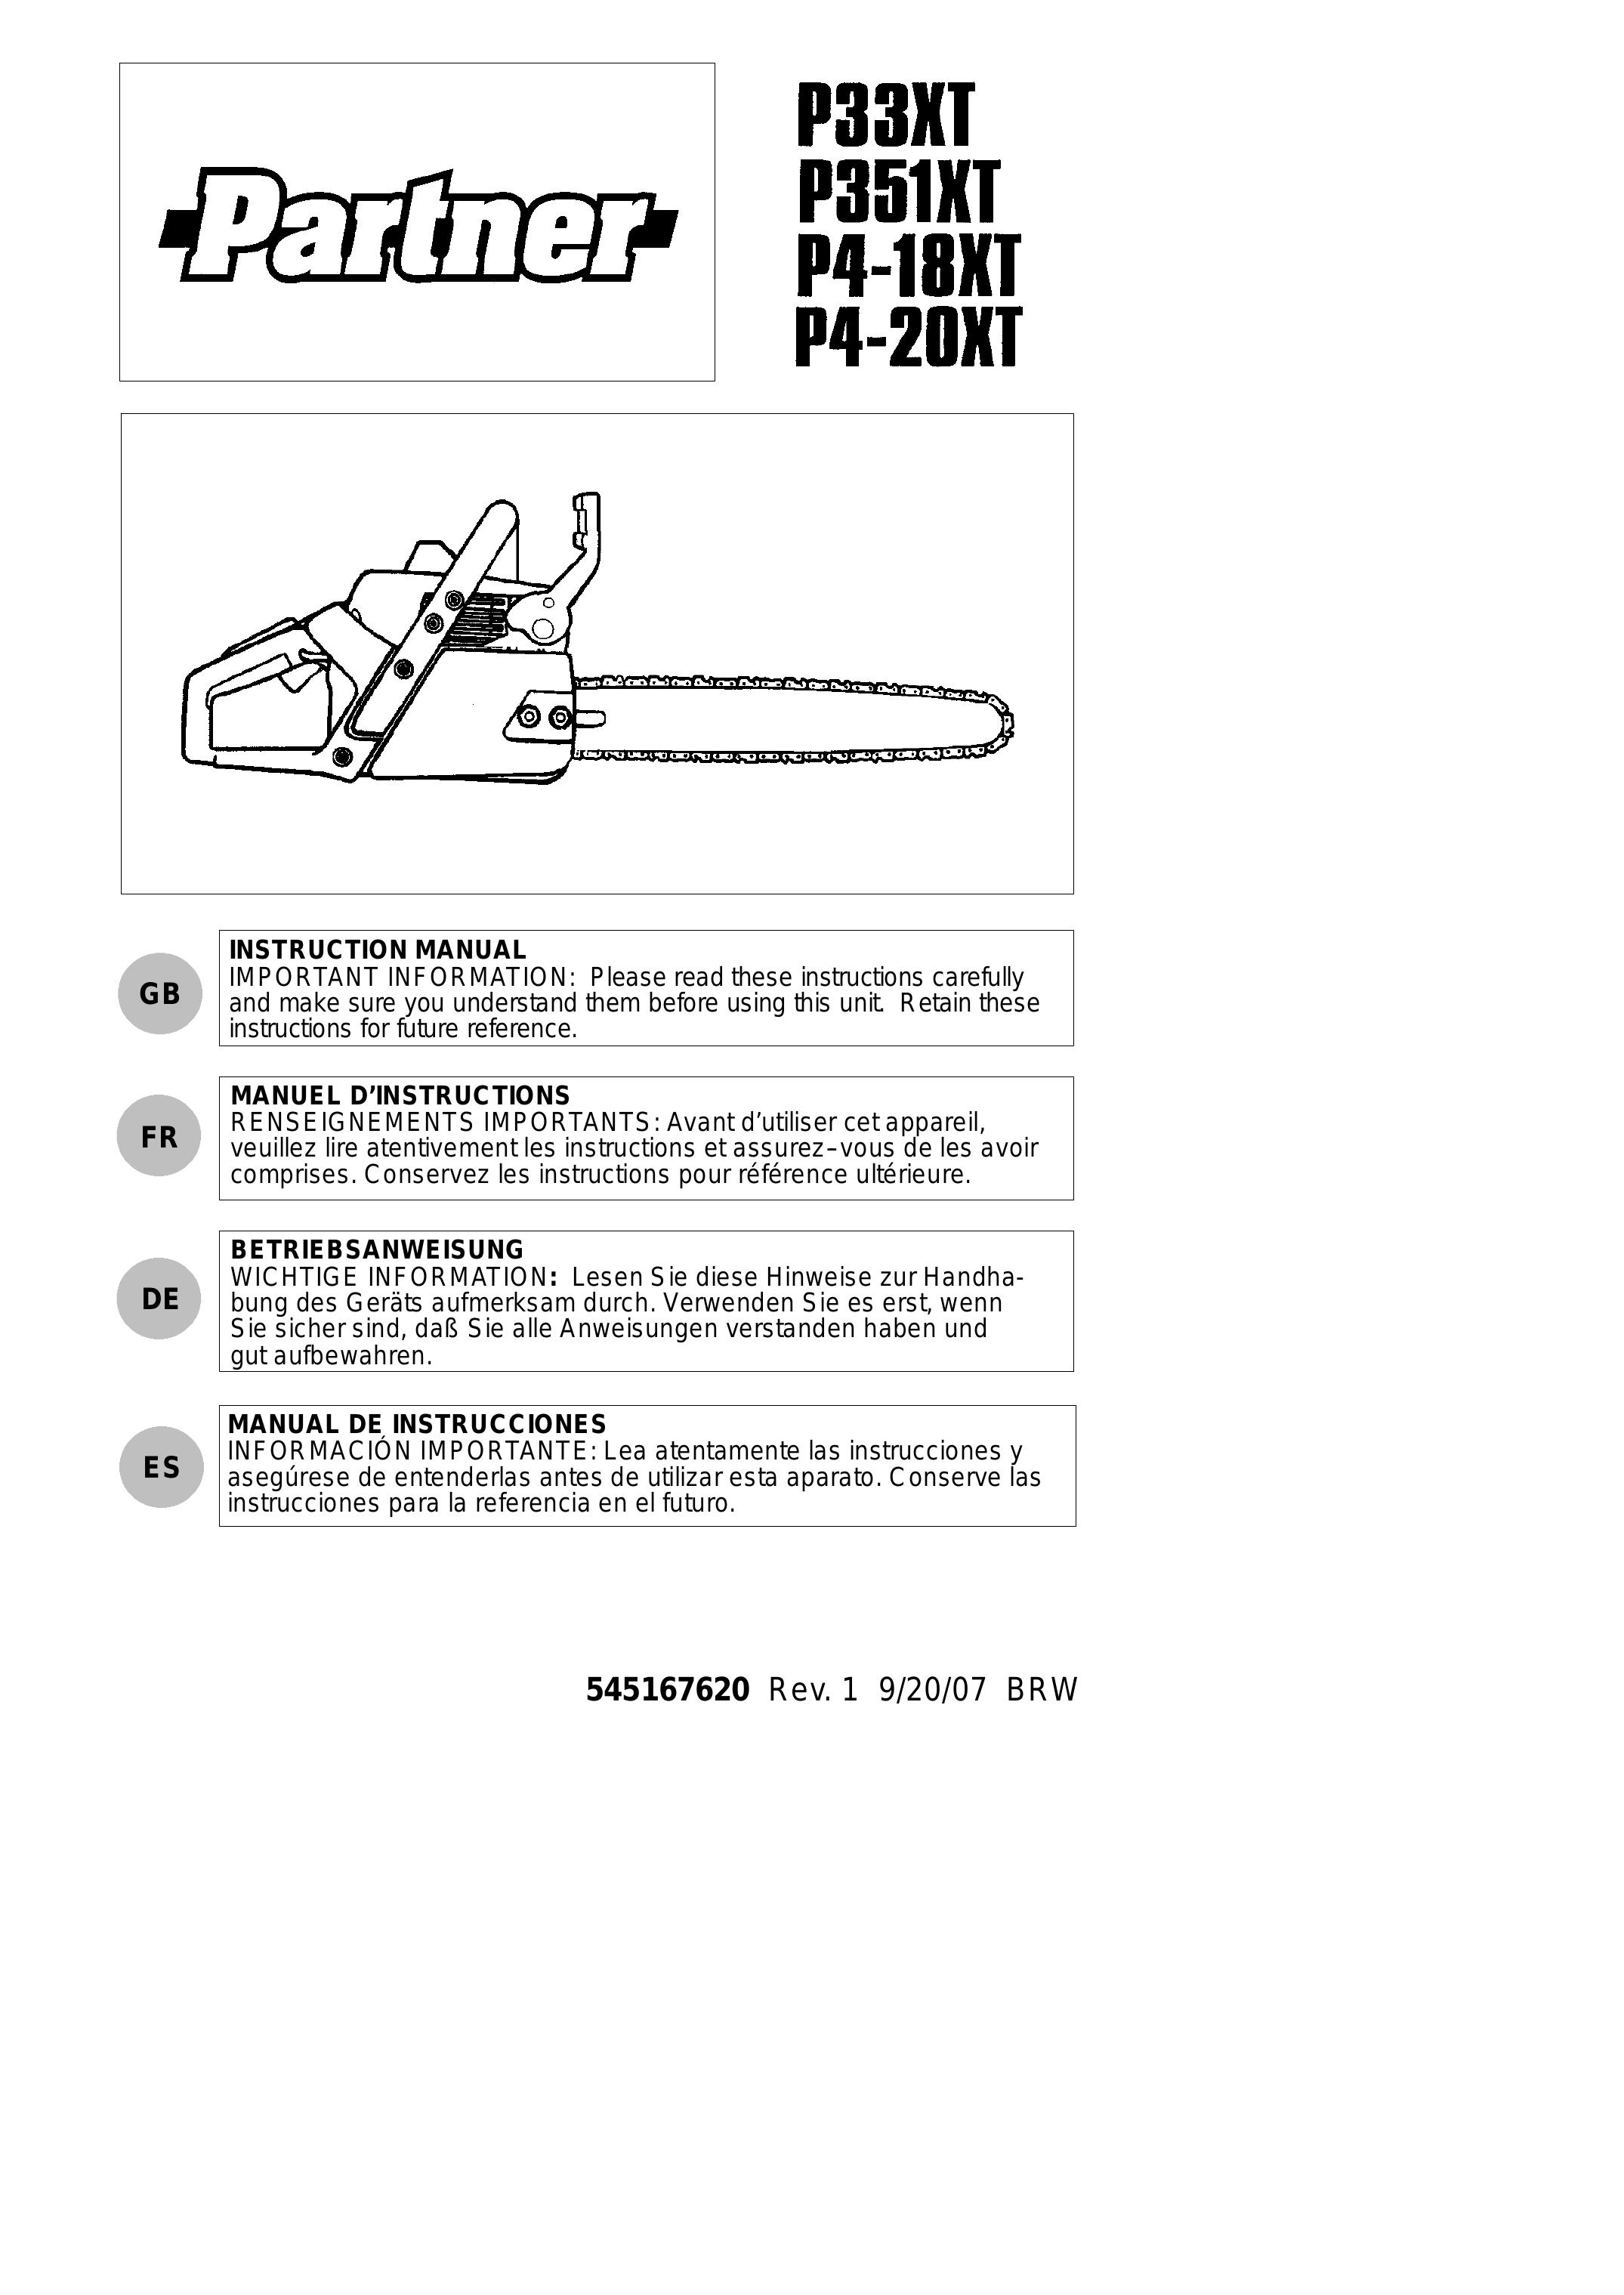 Partner Tech P4-20XT Chainsaw User Manual